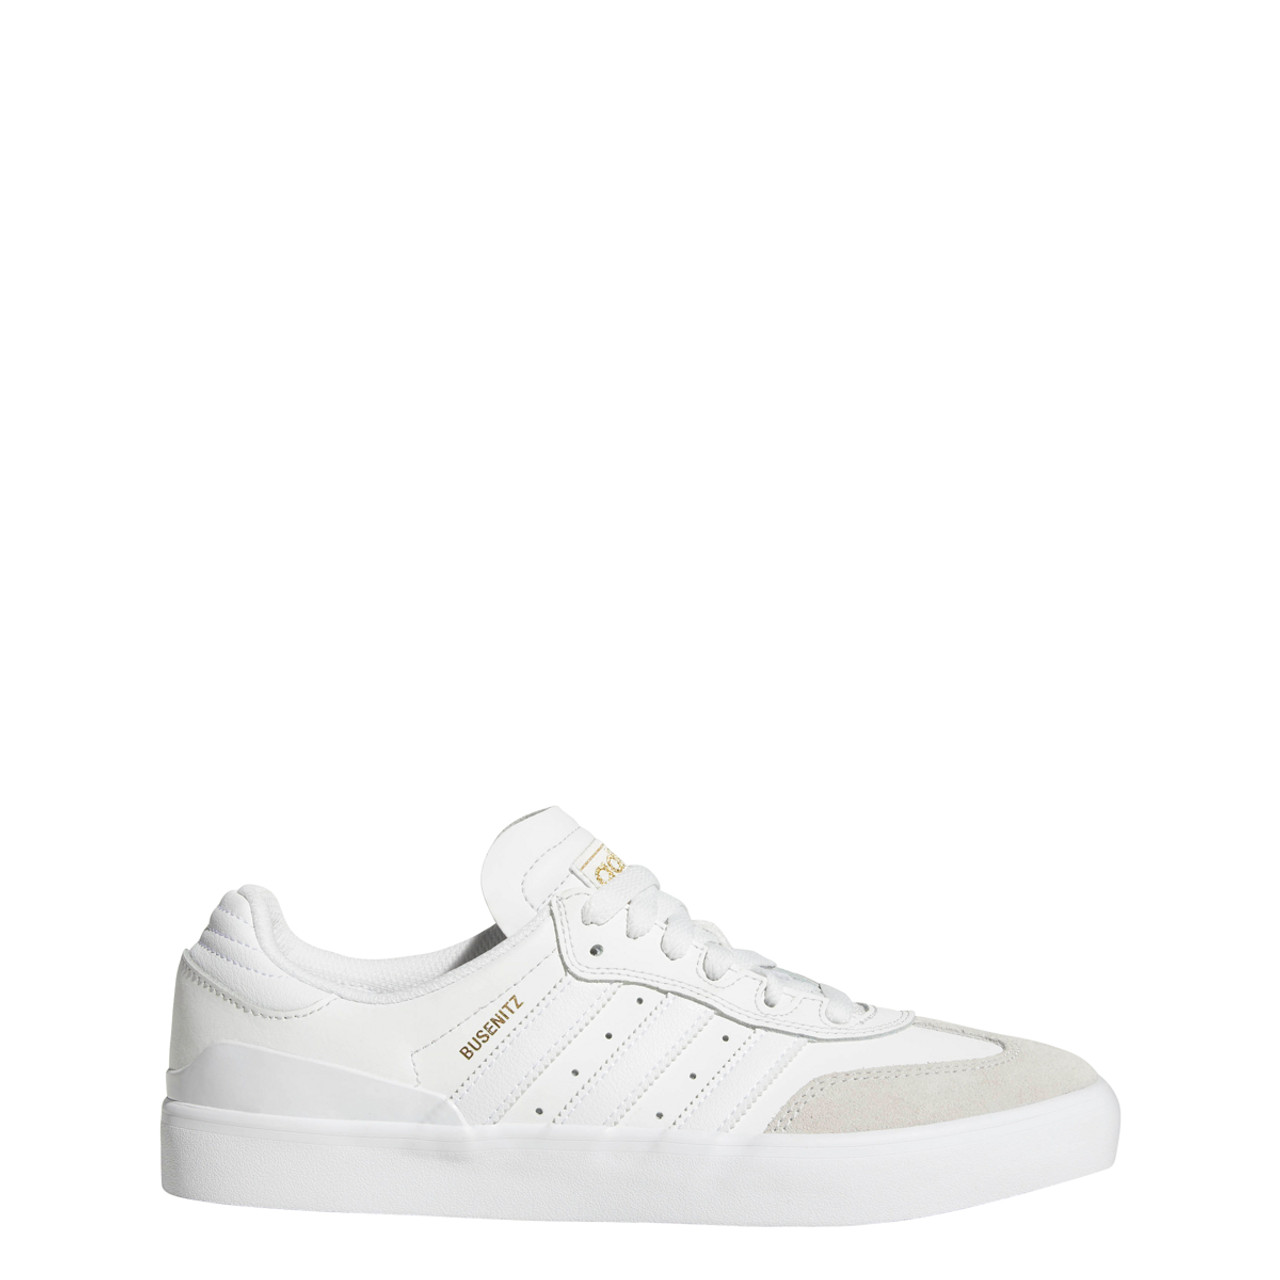 adidas busenitz vulc samba white & gum shoes